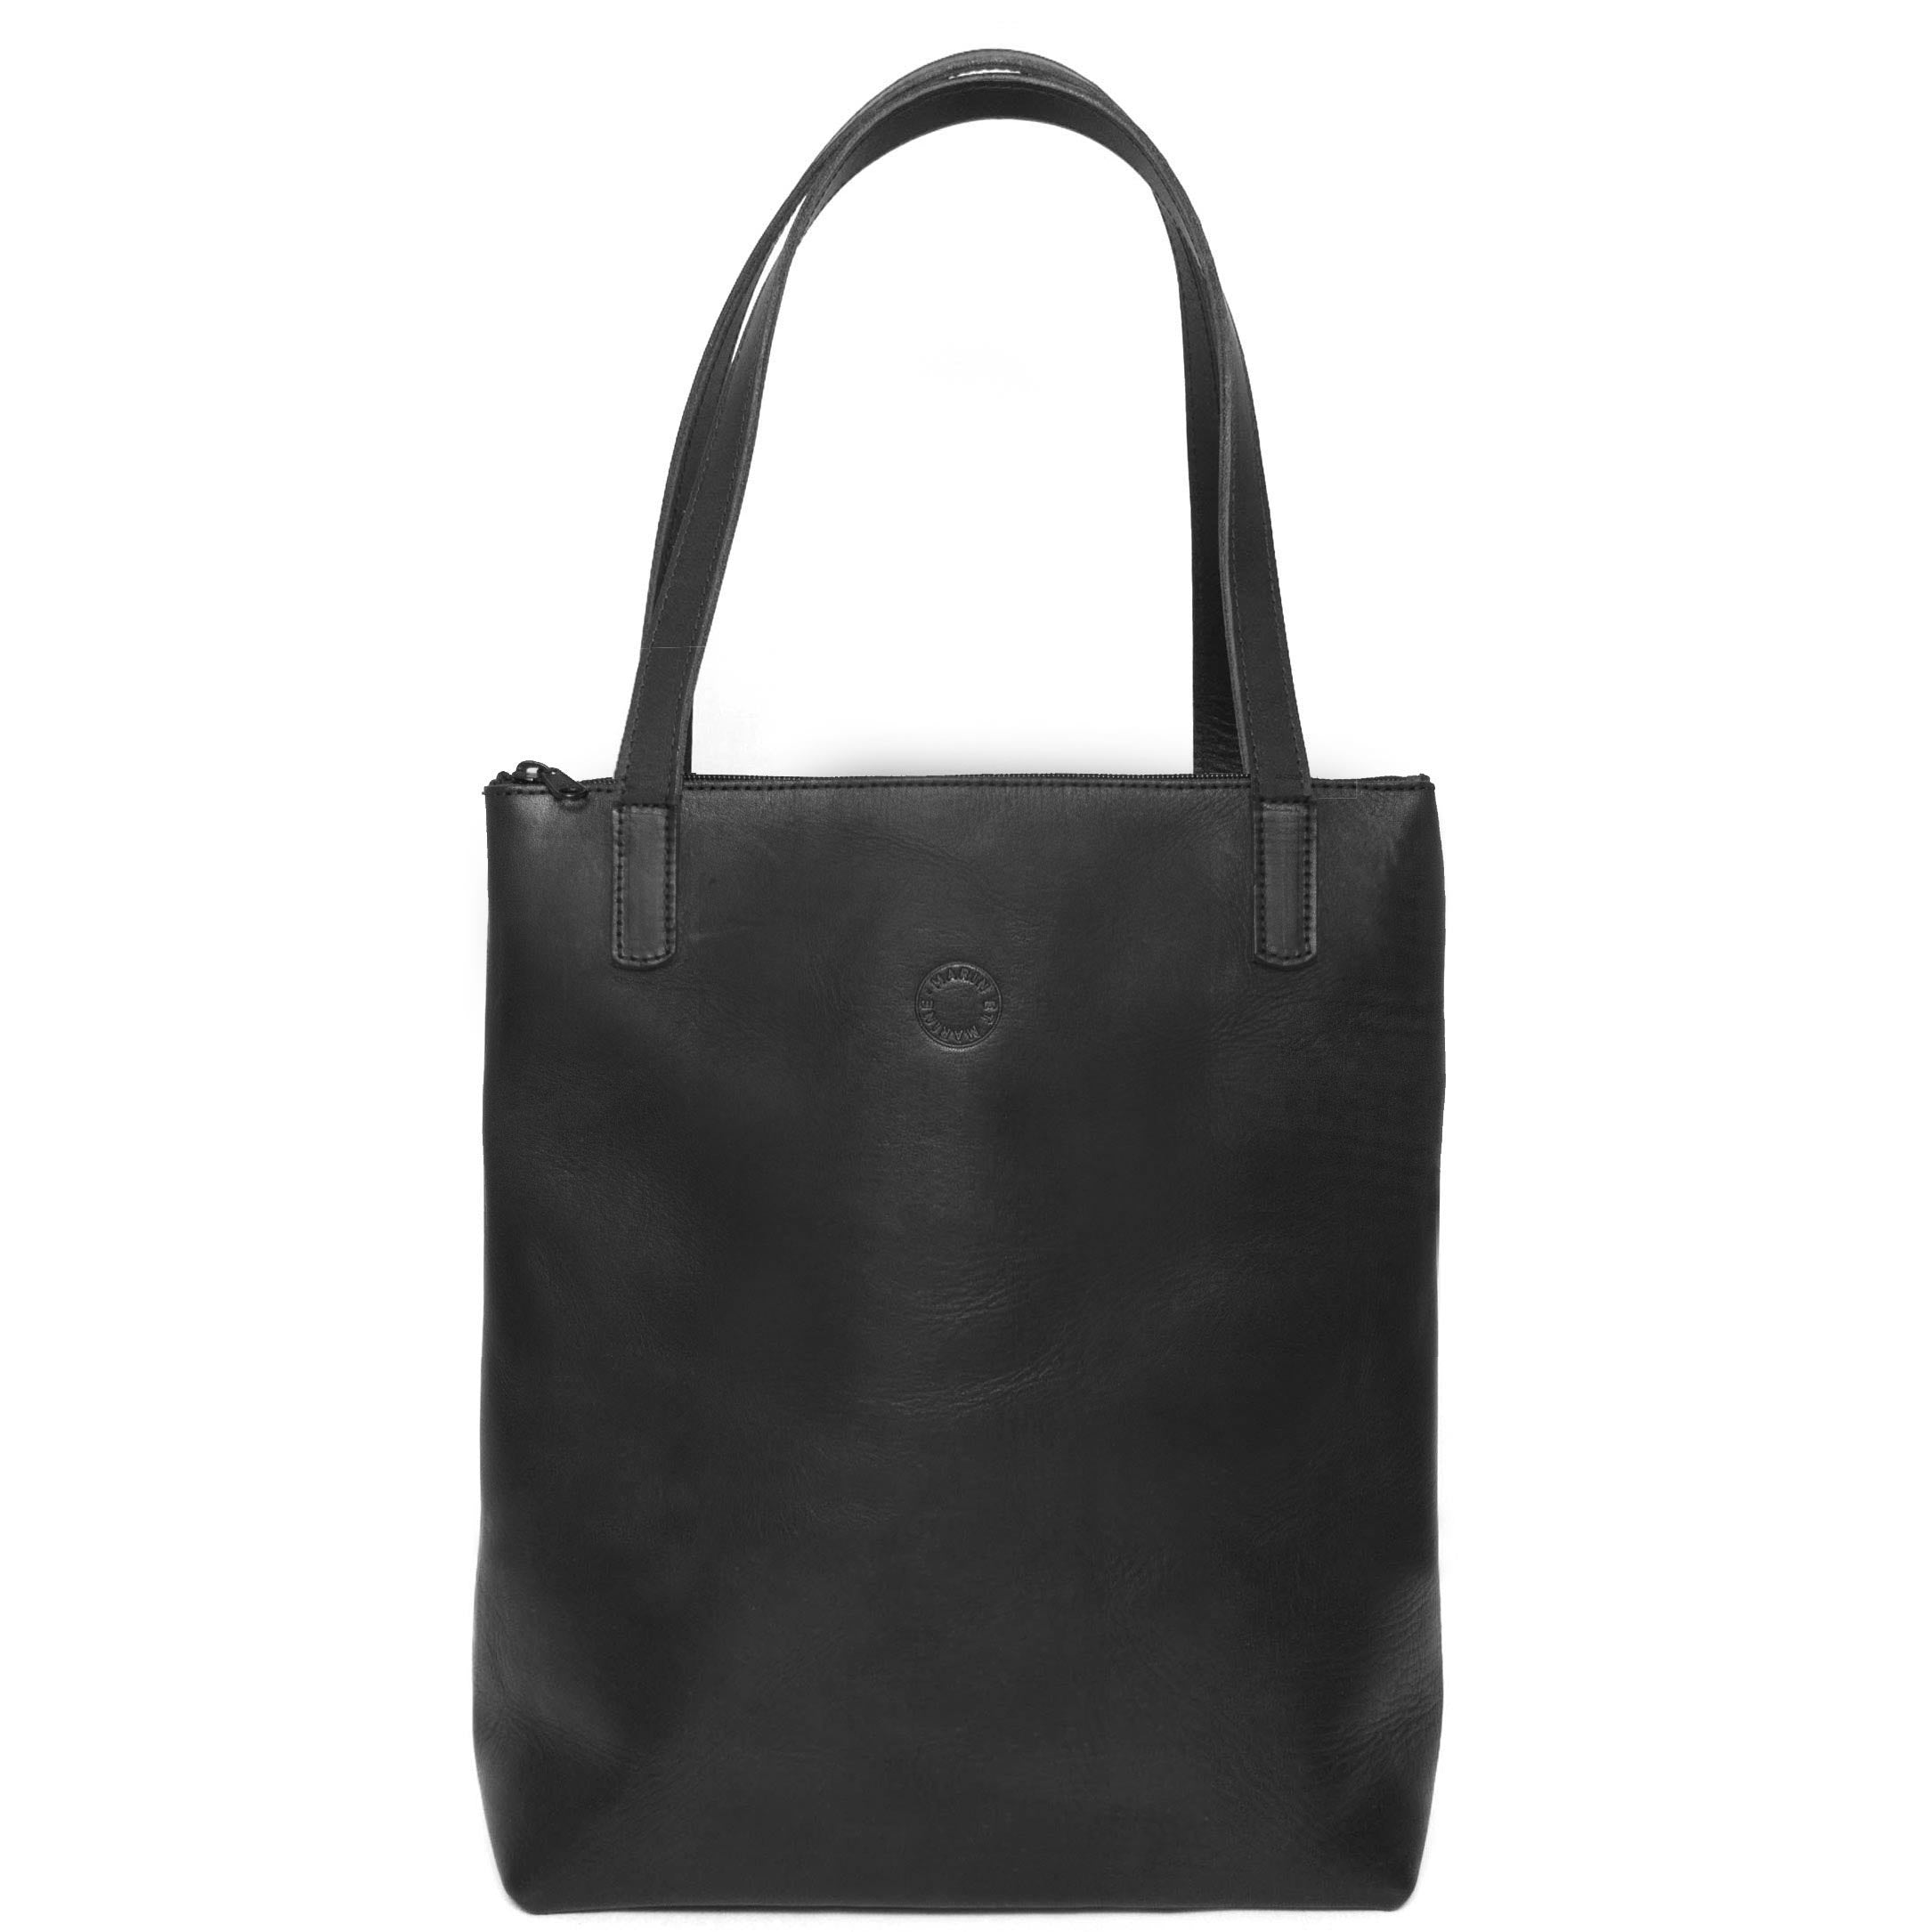 Marin et Marine Shopper Black / Mit Reissverschluss Leder Tote Bag